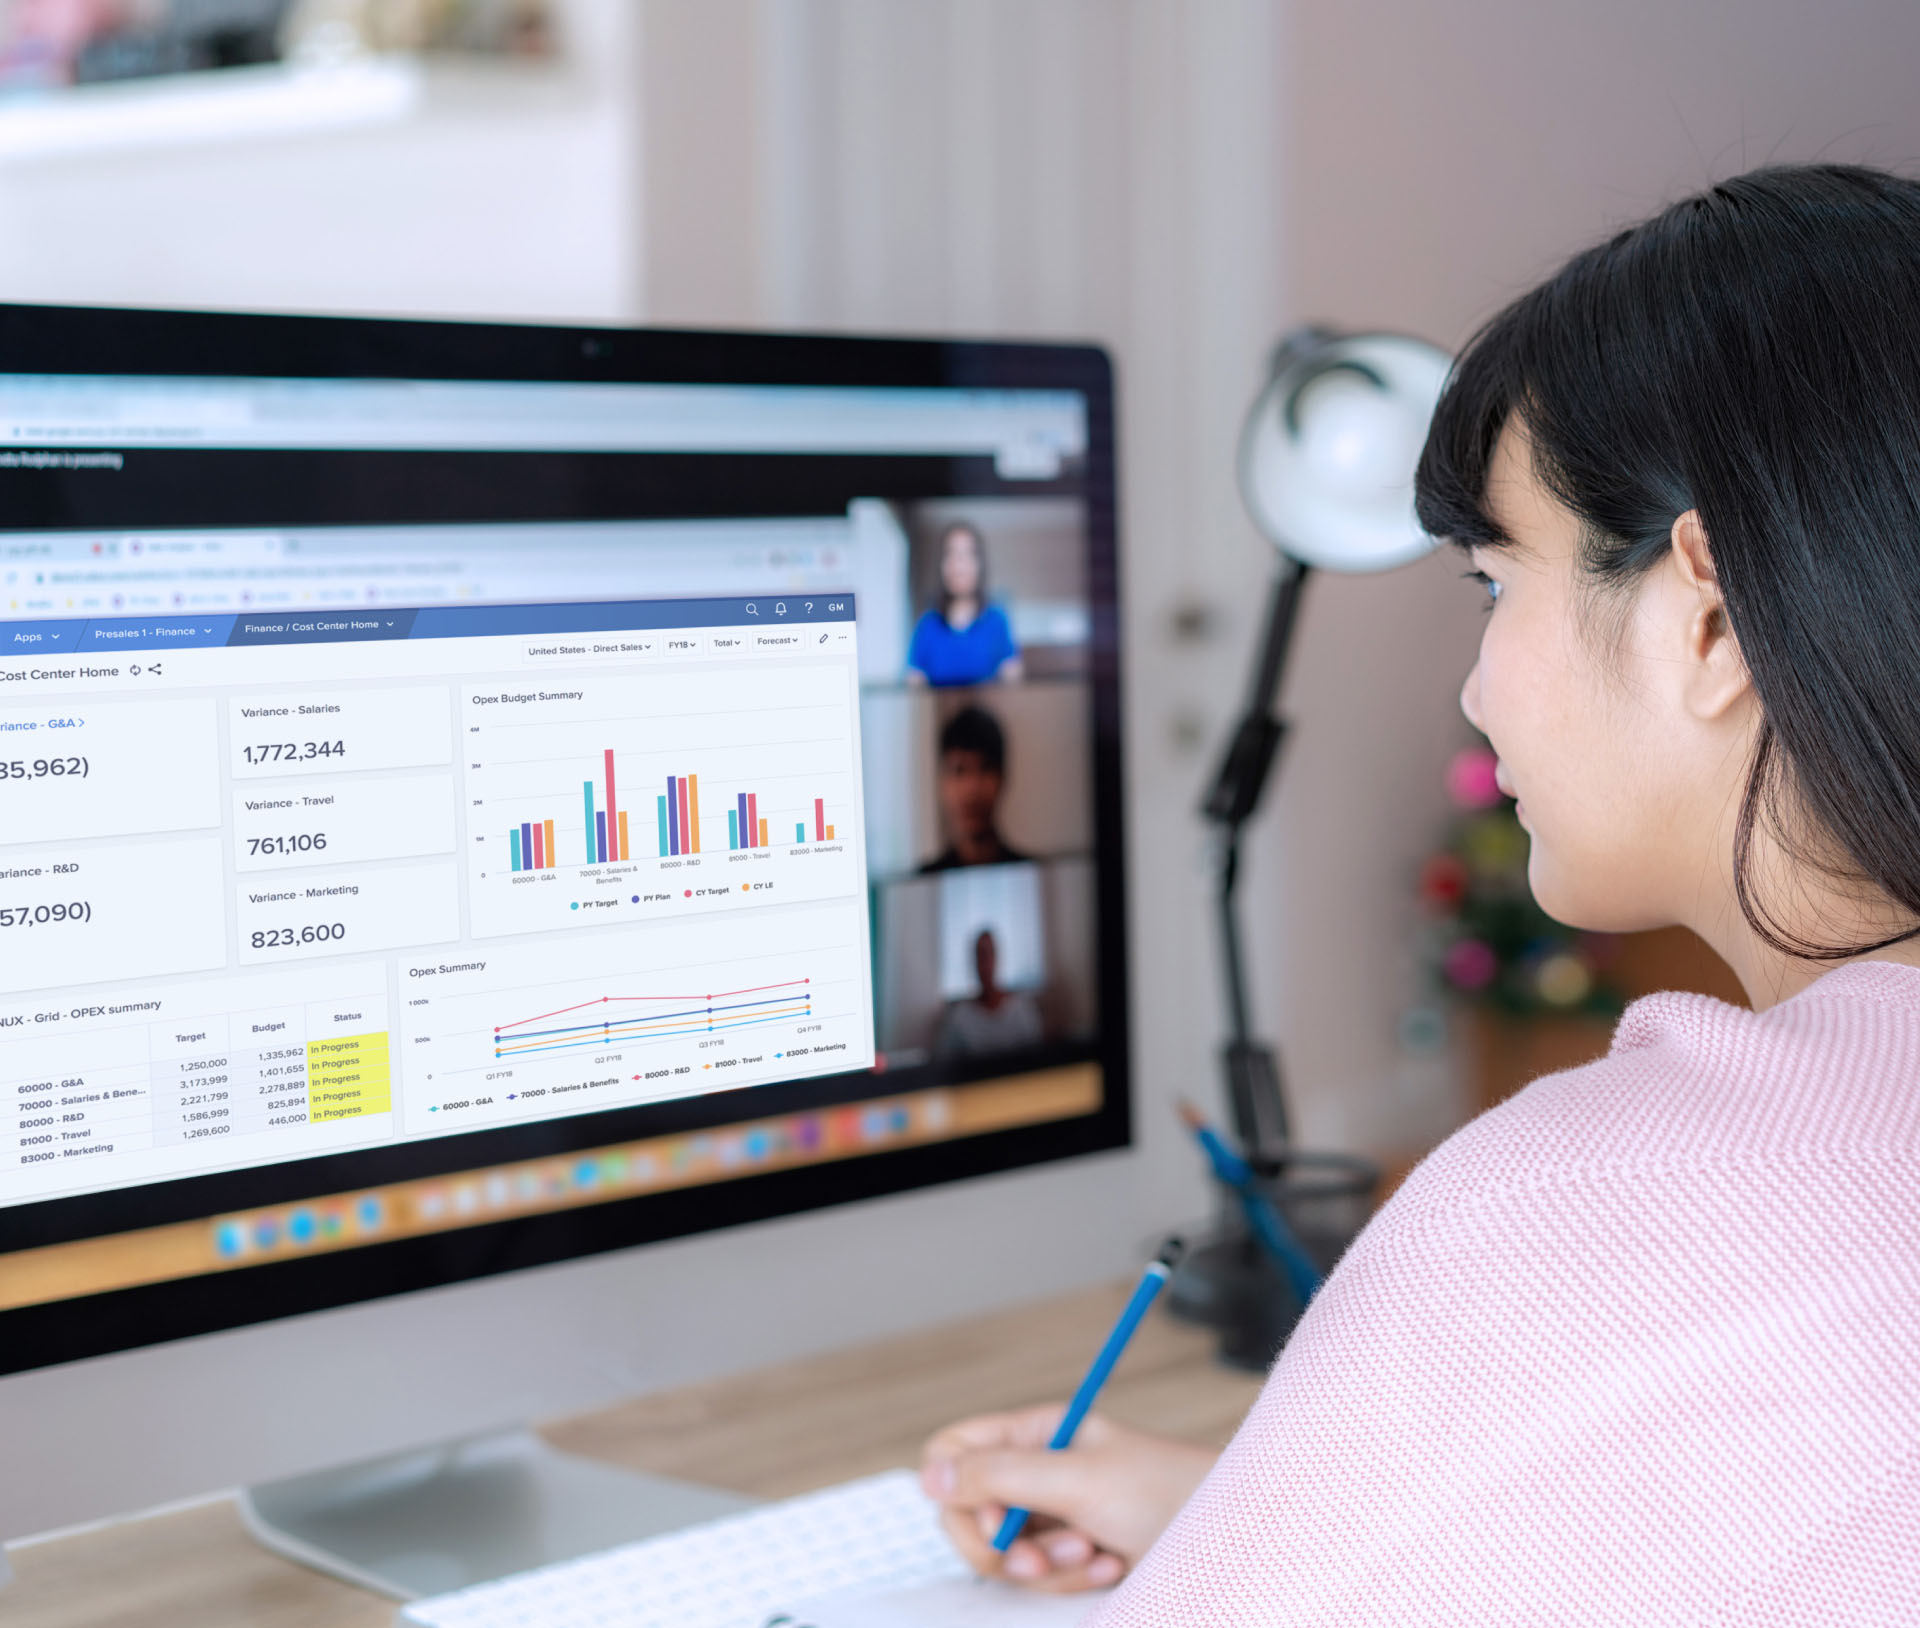 Business woman using Anaplan software, bar charts representing prediction models, on an iMac